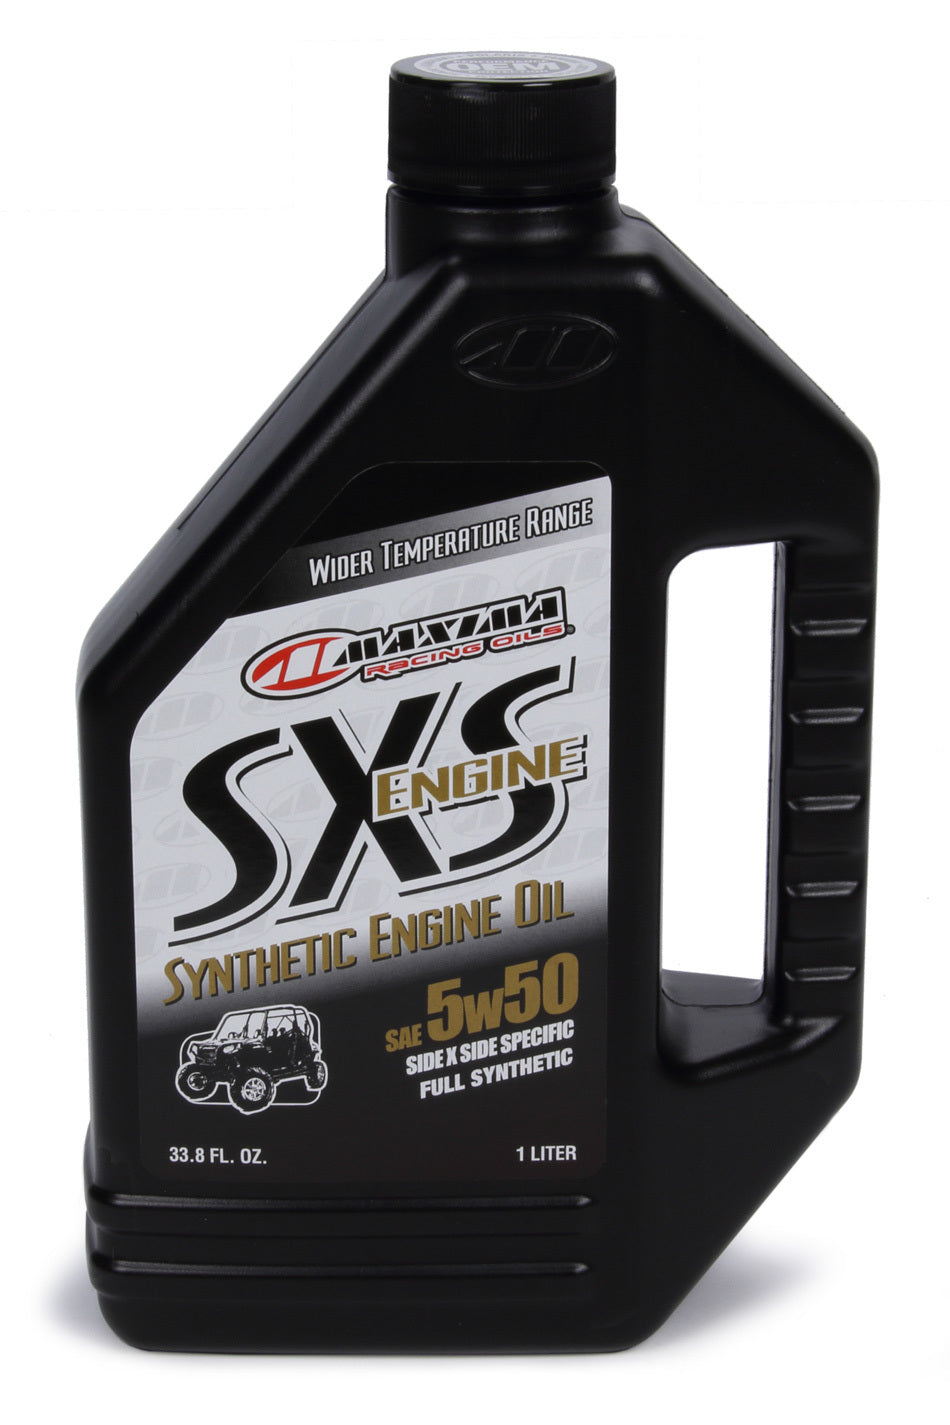 SXS Engine Full Syntheti c 5w50 1 Liter